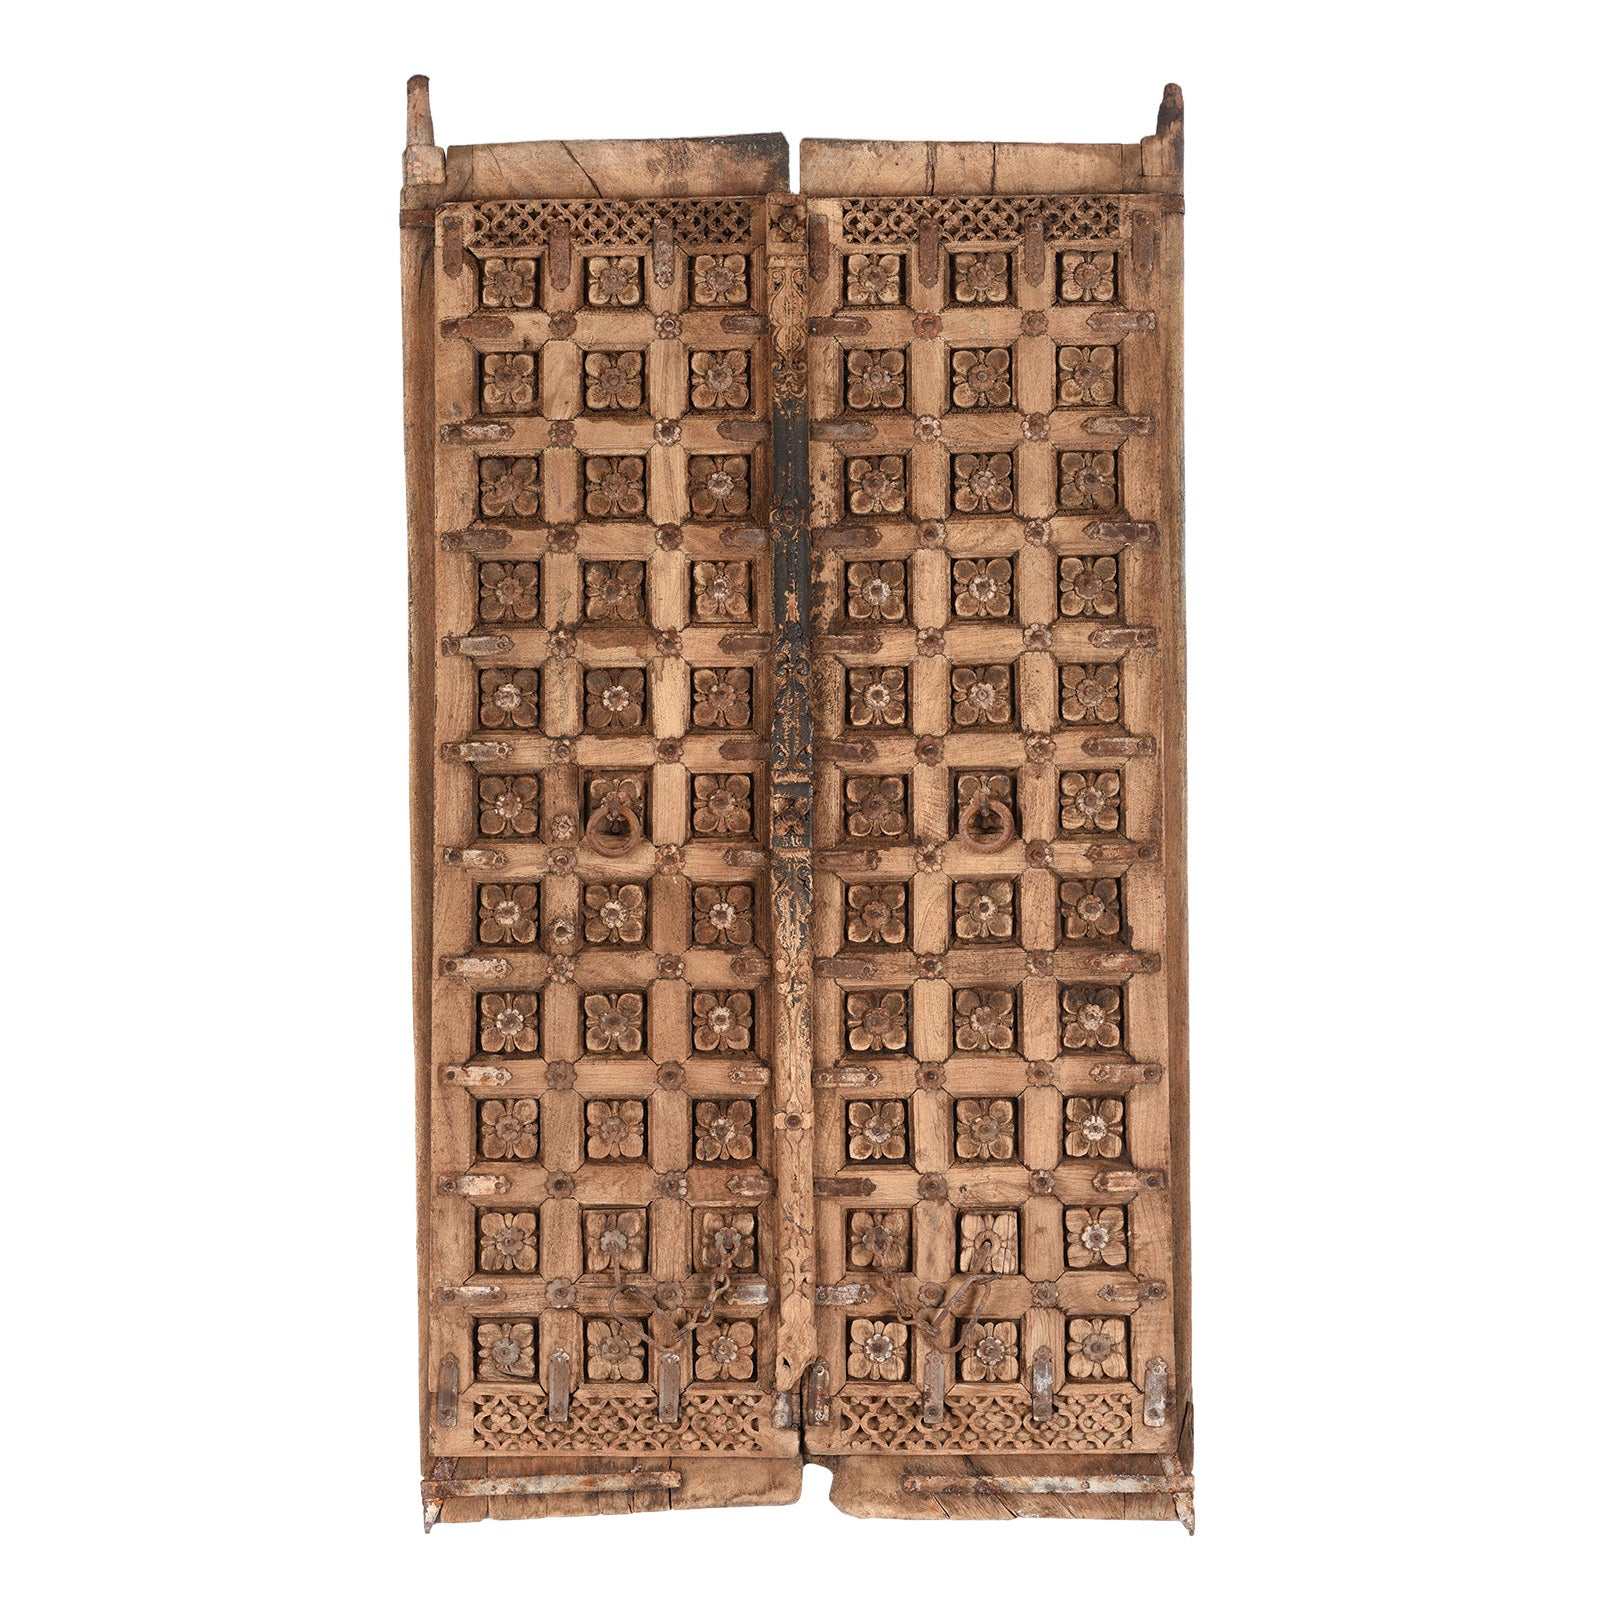 Carved Mughal Teakwood Door From Gujarat | Indigo Antiques